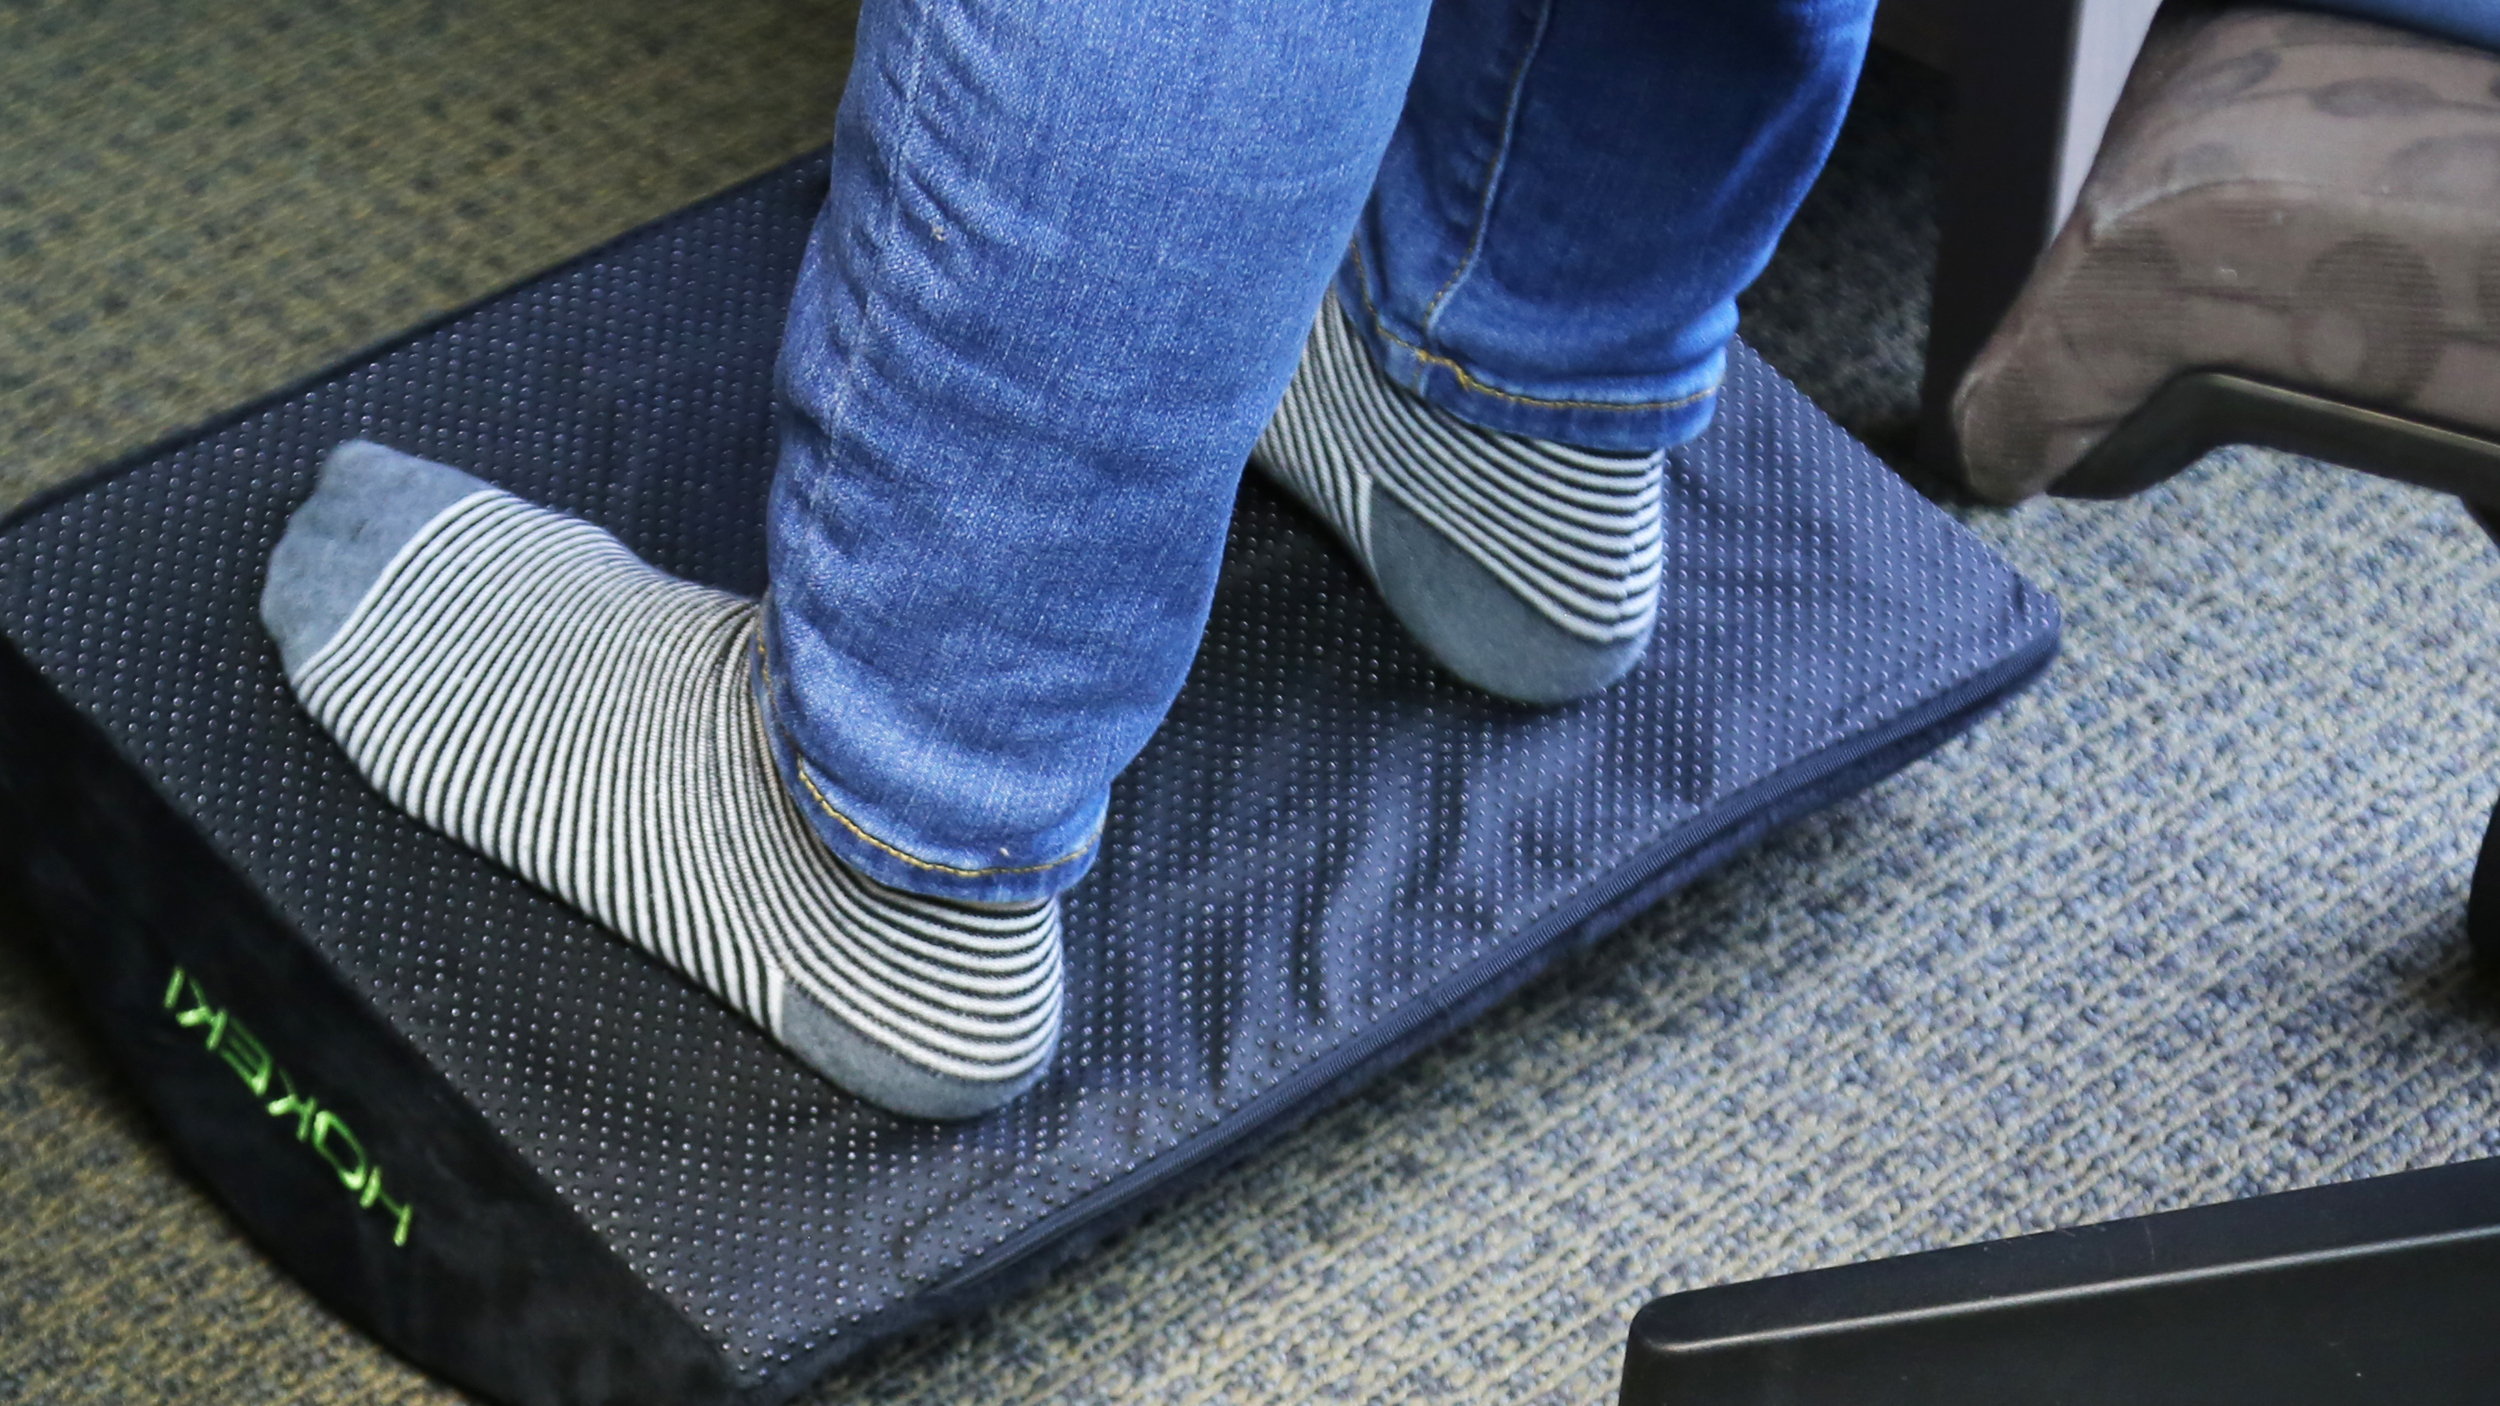 https://www.dontwasteyourmoney.com/wp-content/uploads/2020/09/under-desk-footrest-hokeki-foam-non-slip-under-desk-footrest-pillow-sitting-upside-down-review-ub-1.jpg